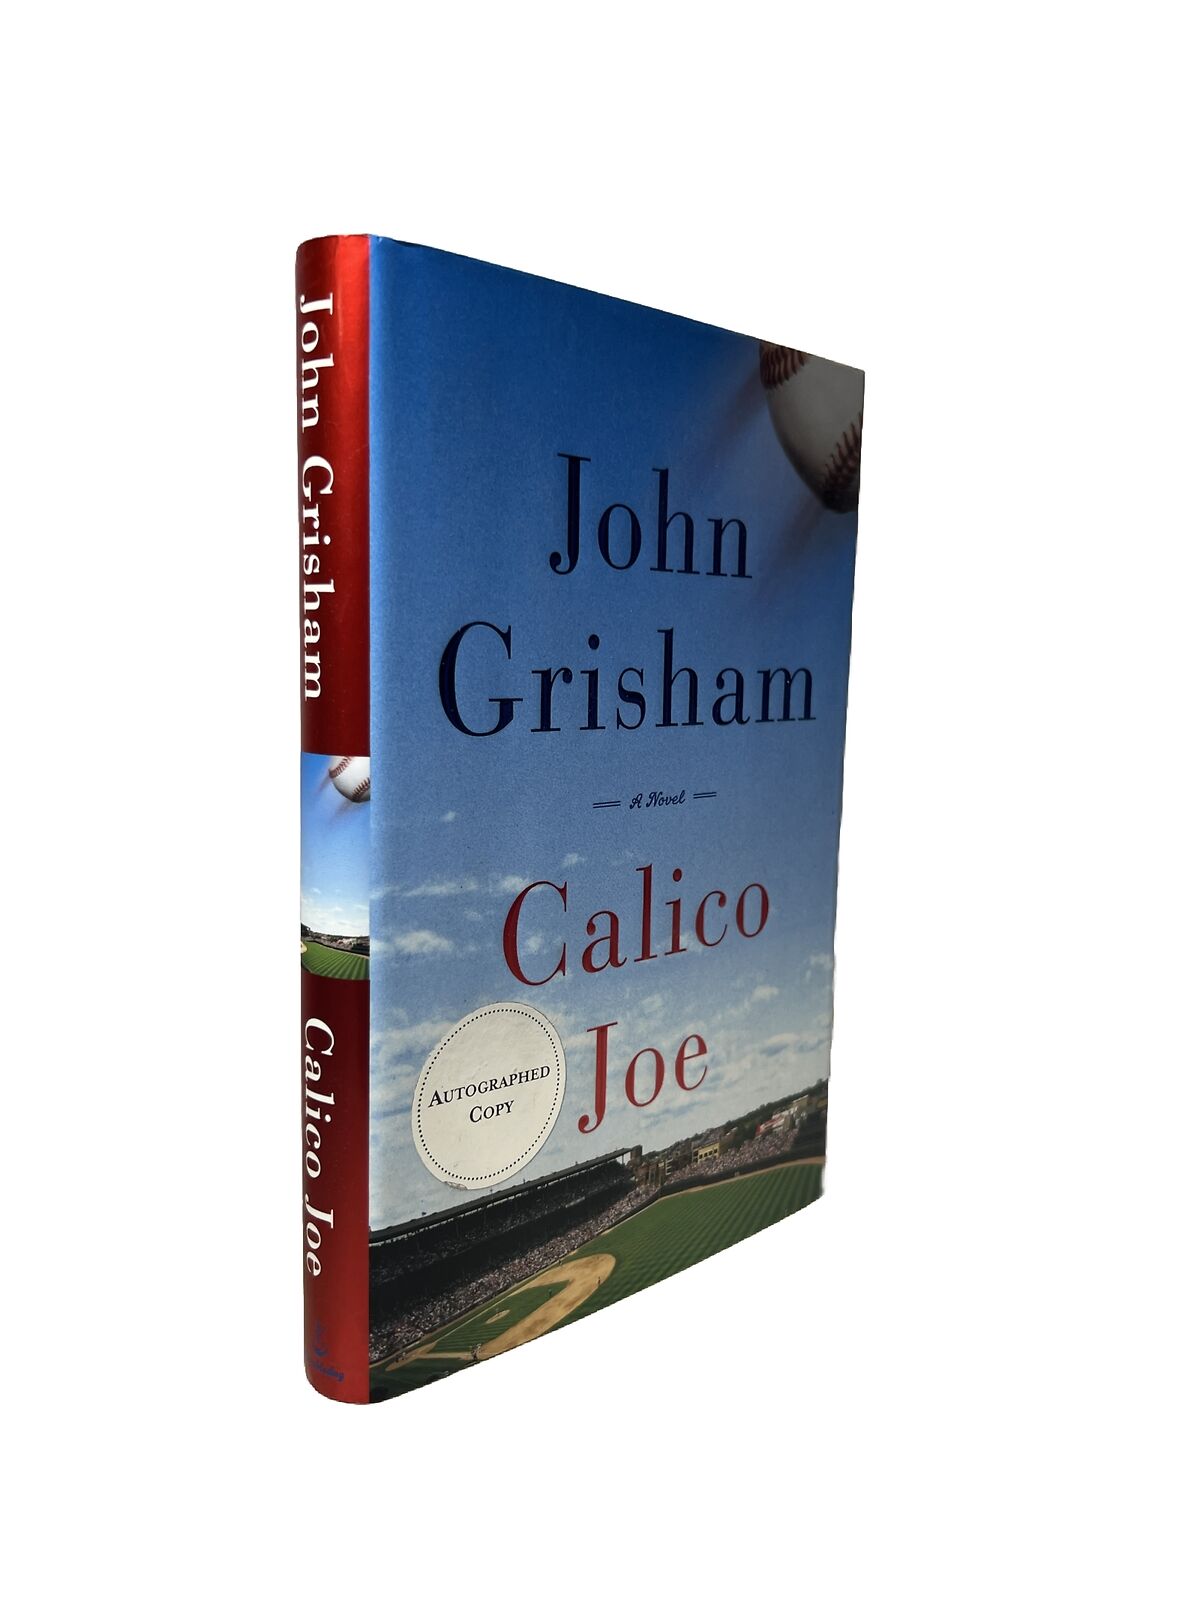 Calico Joe - Signed Book by John Grisham